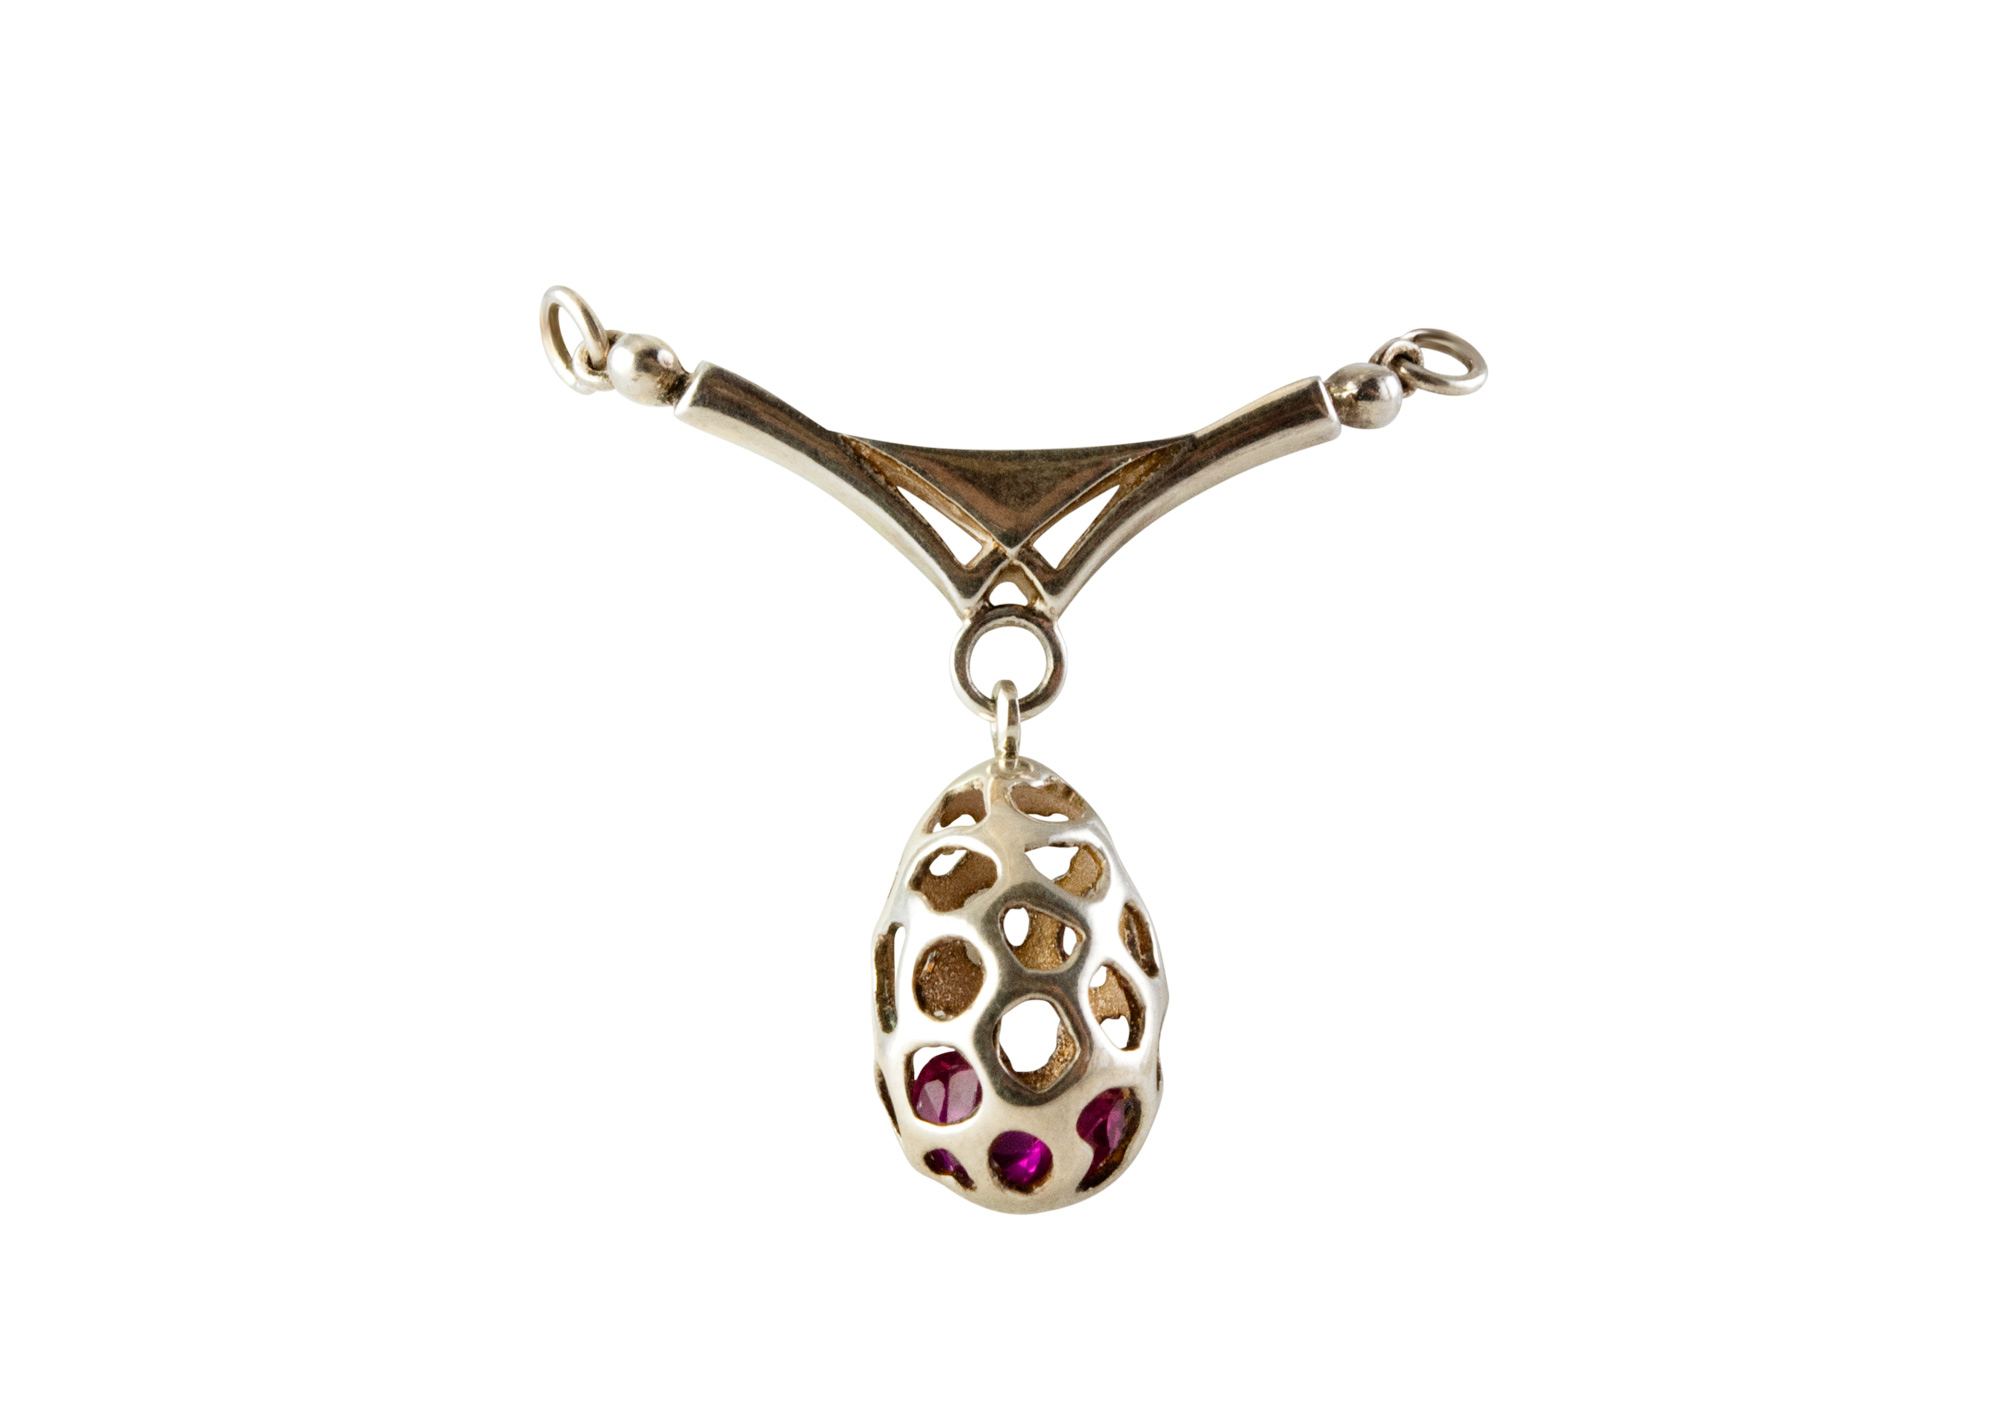 Buy Silver Pendant Holds Purple Gems (w/ Chain!) at GoldenCockerel.com